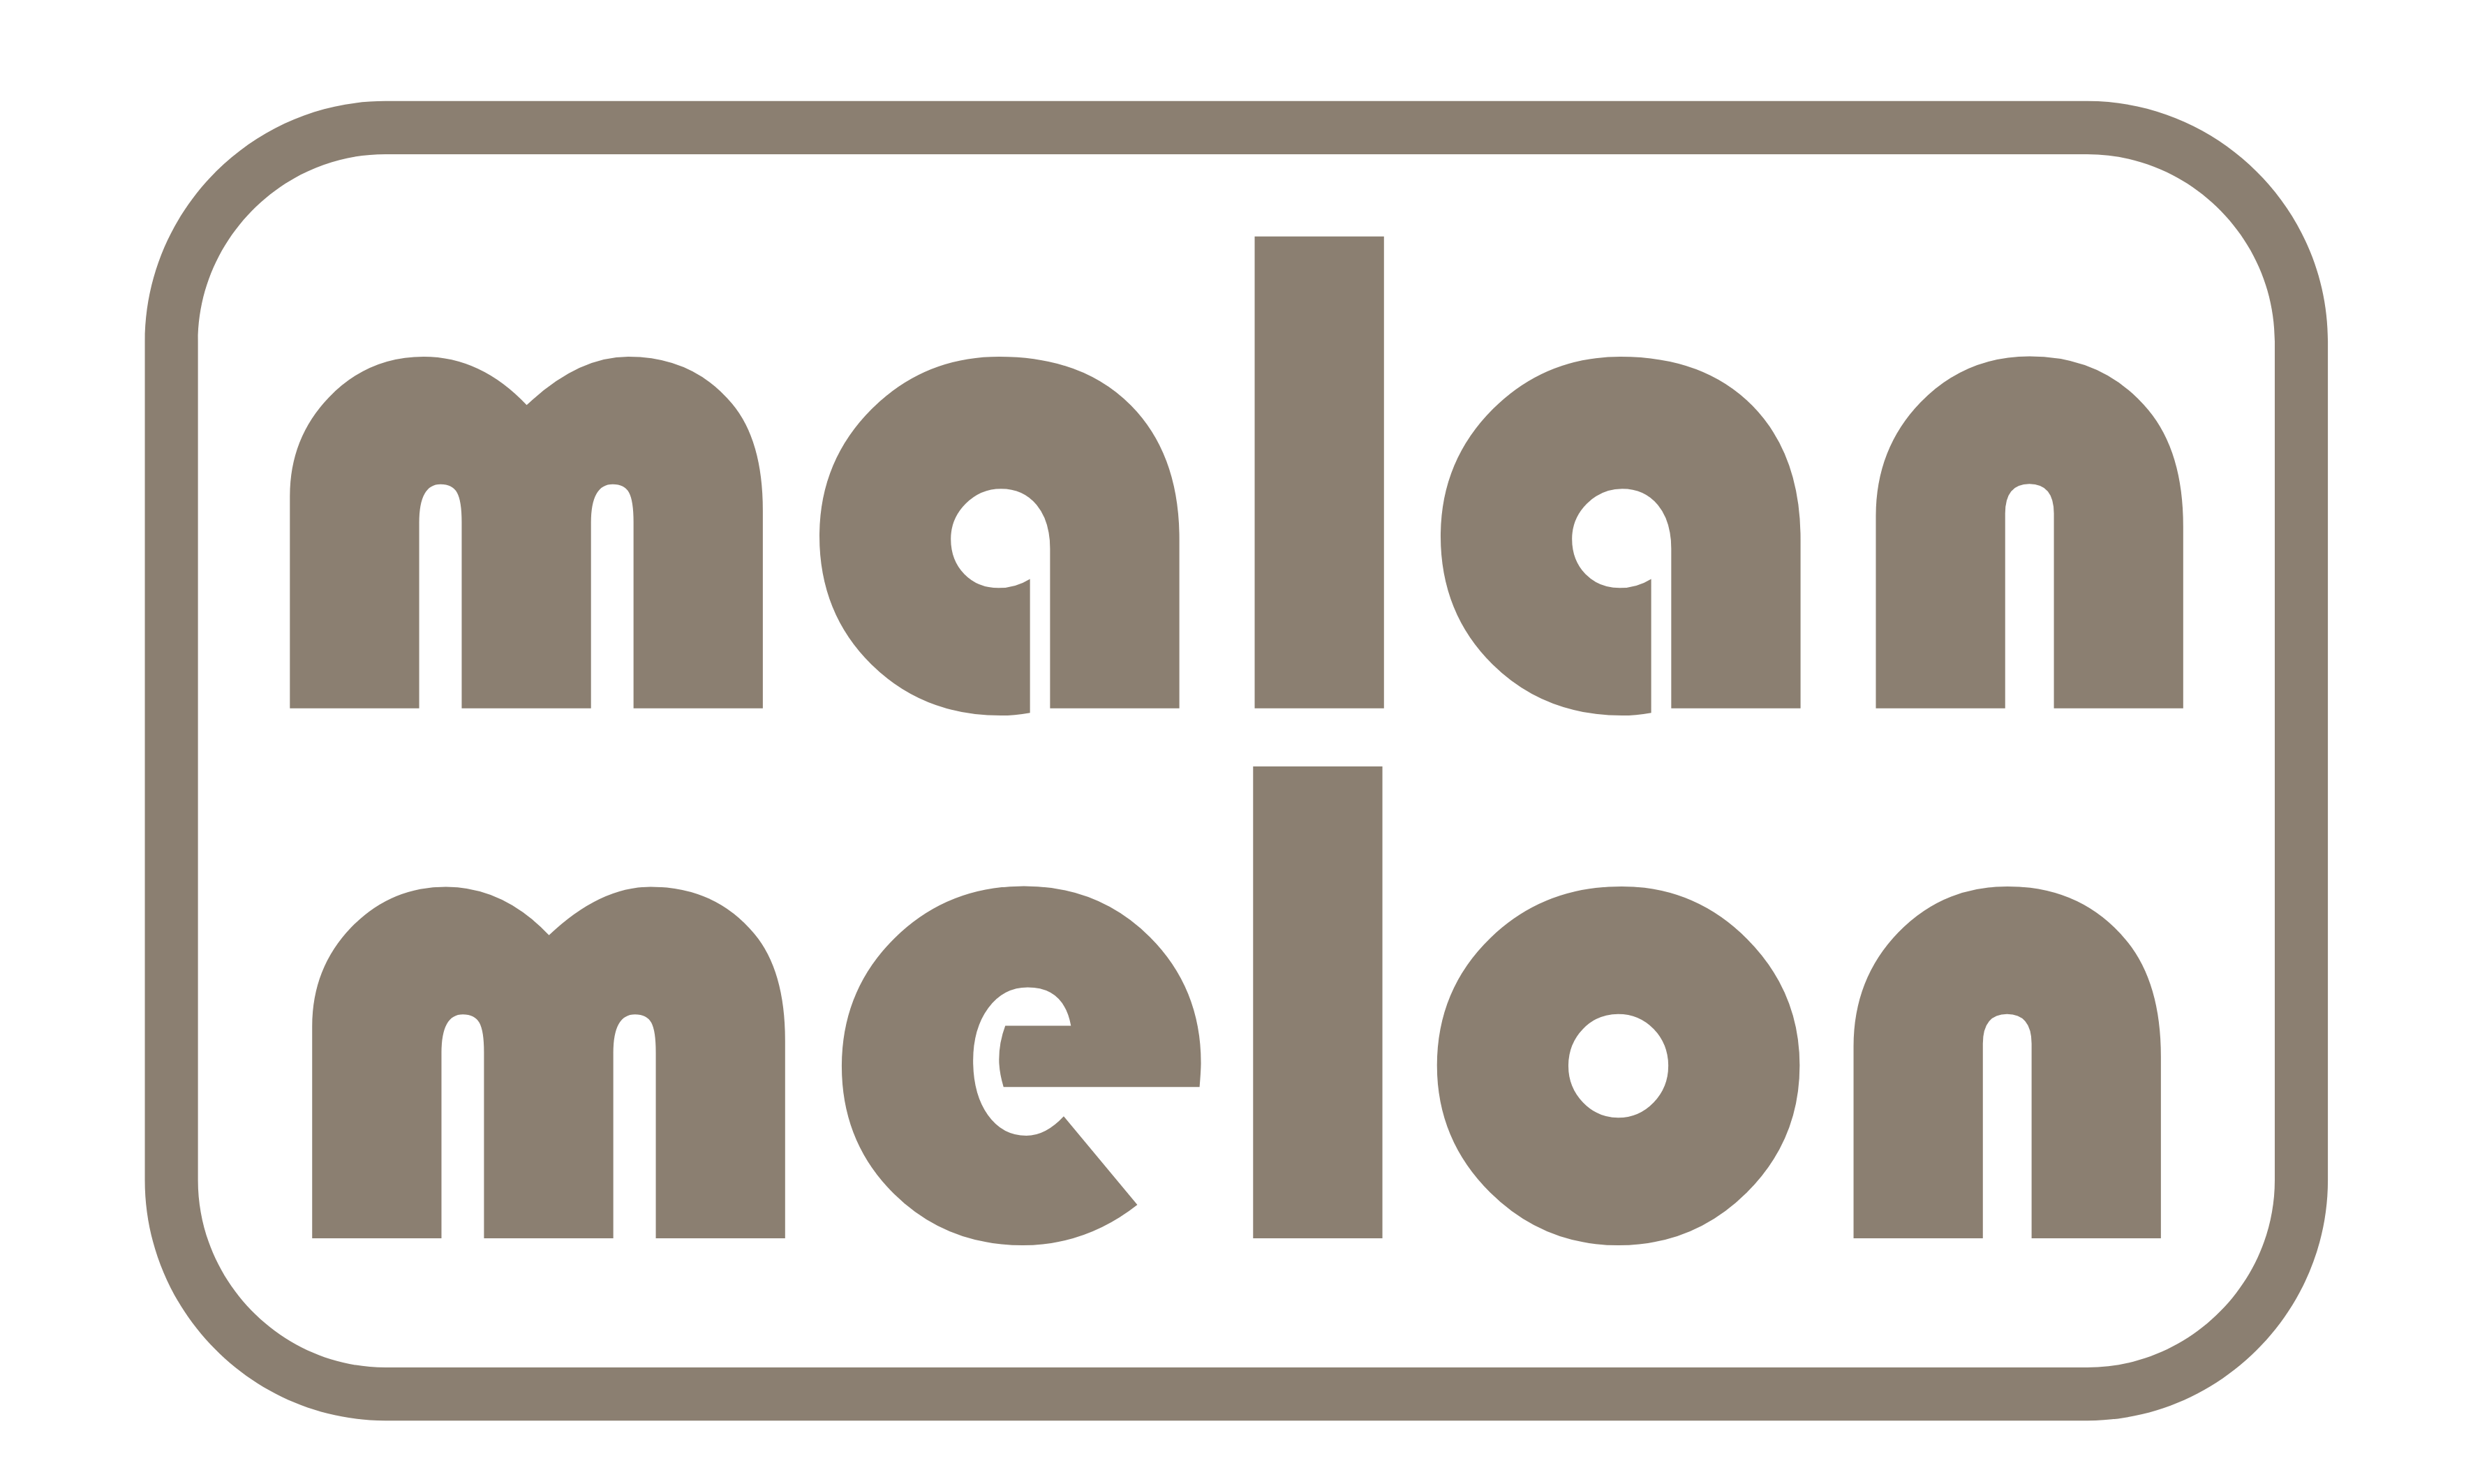 malanmelon - Kids T-Shirt – Organic Cotton – Wait, What? Slogan – White on Multi-Colours